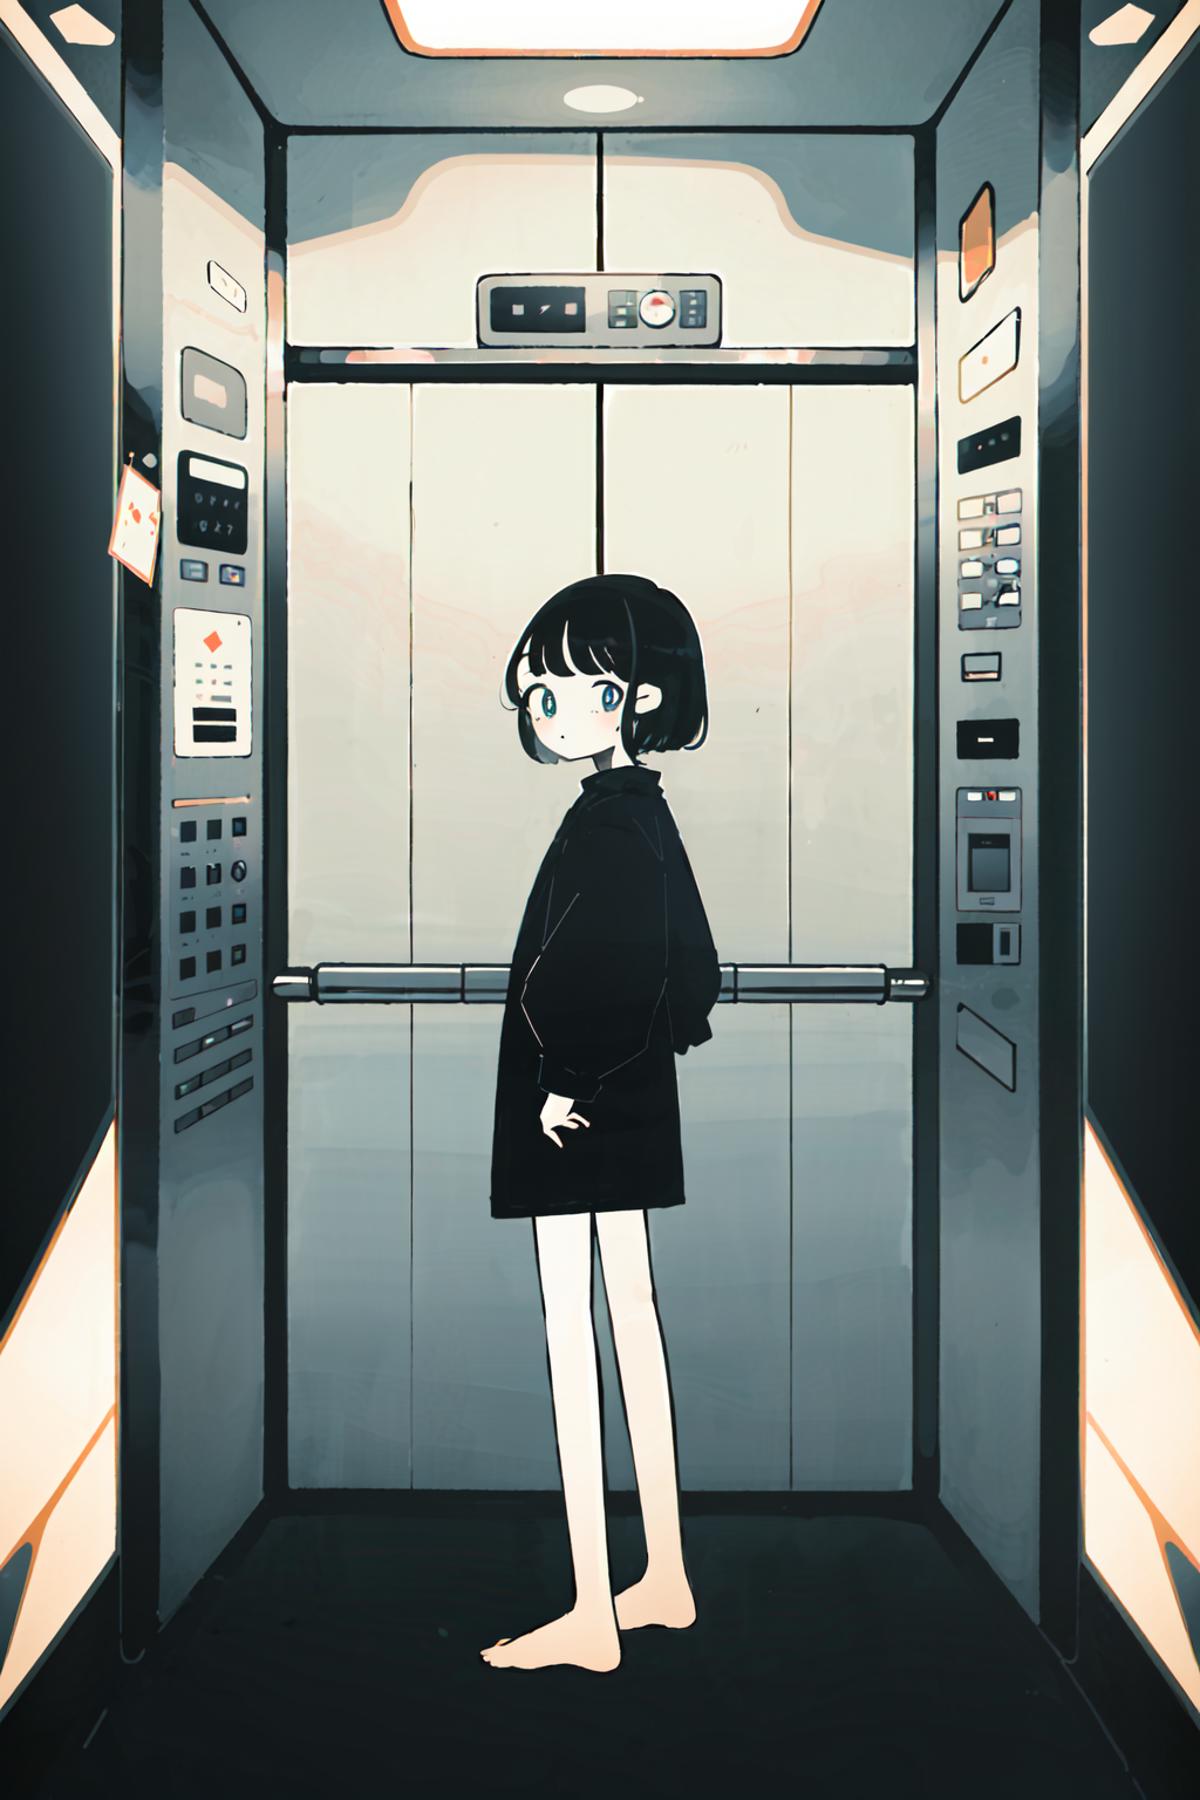 Inside elevator image by bittercat